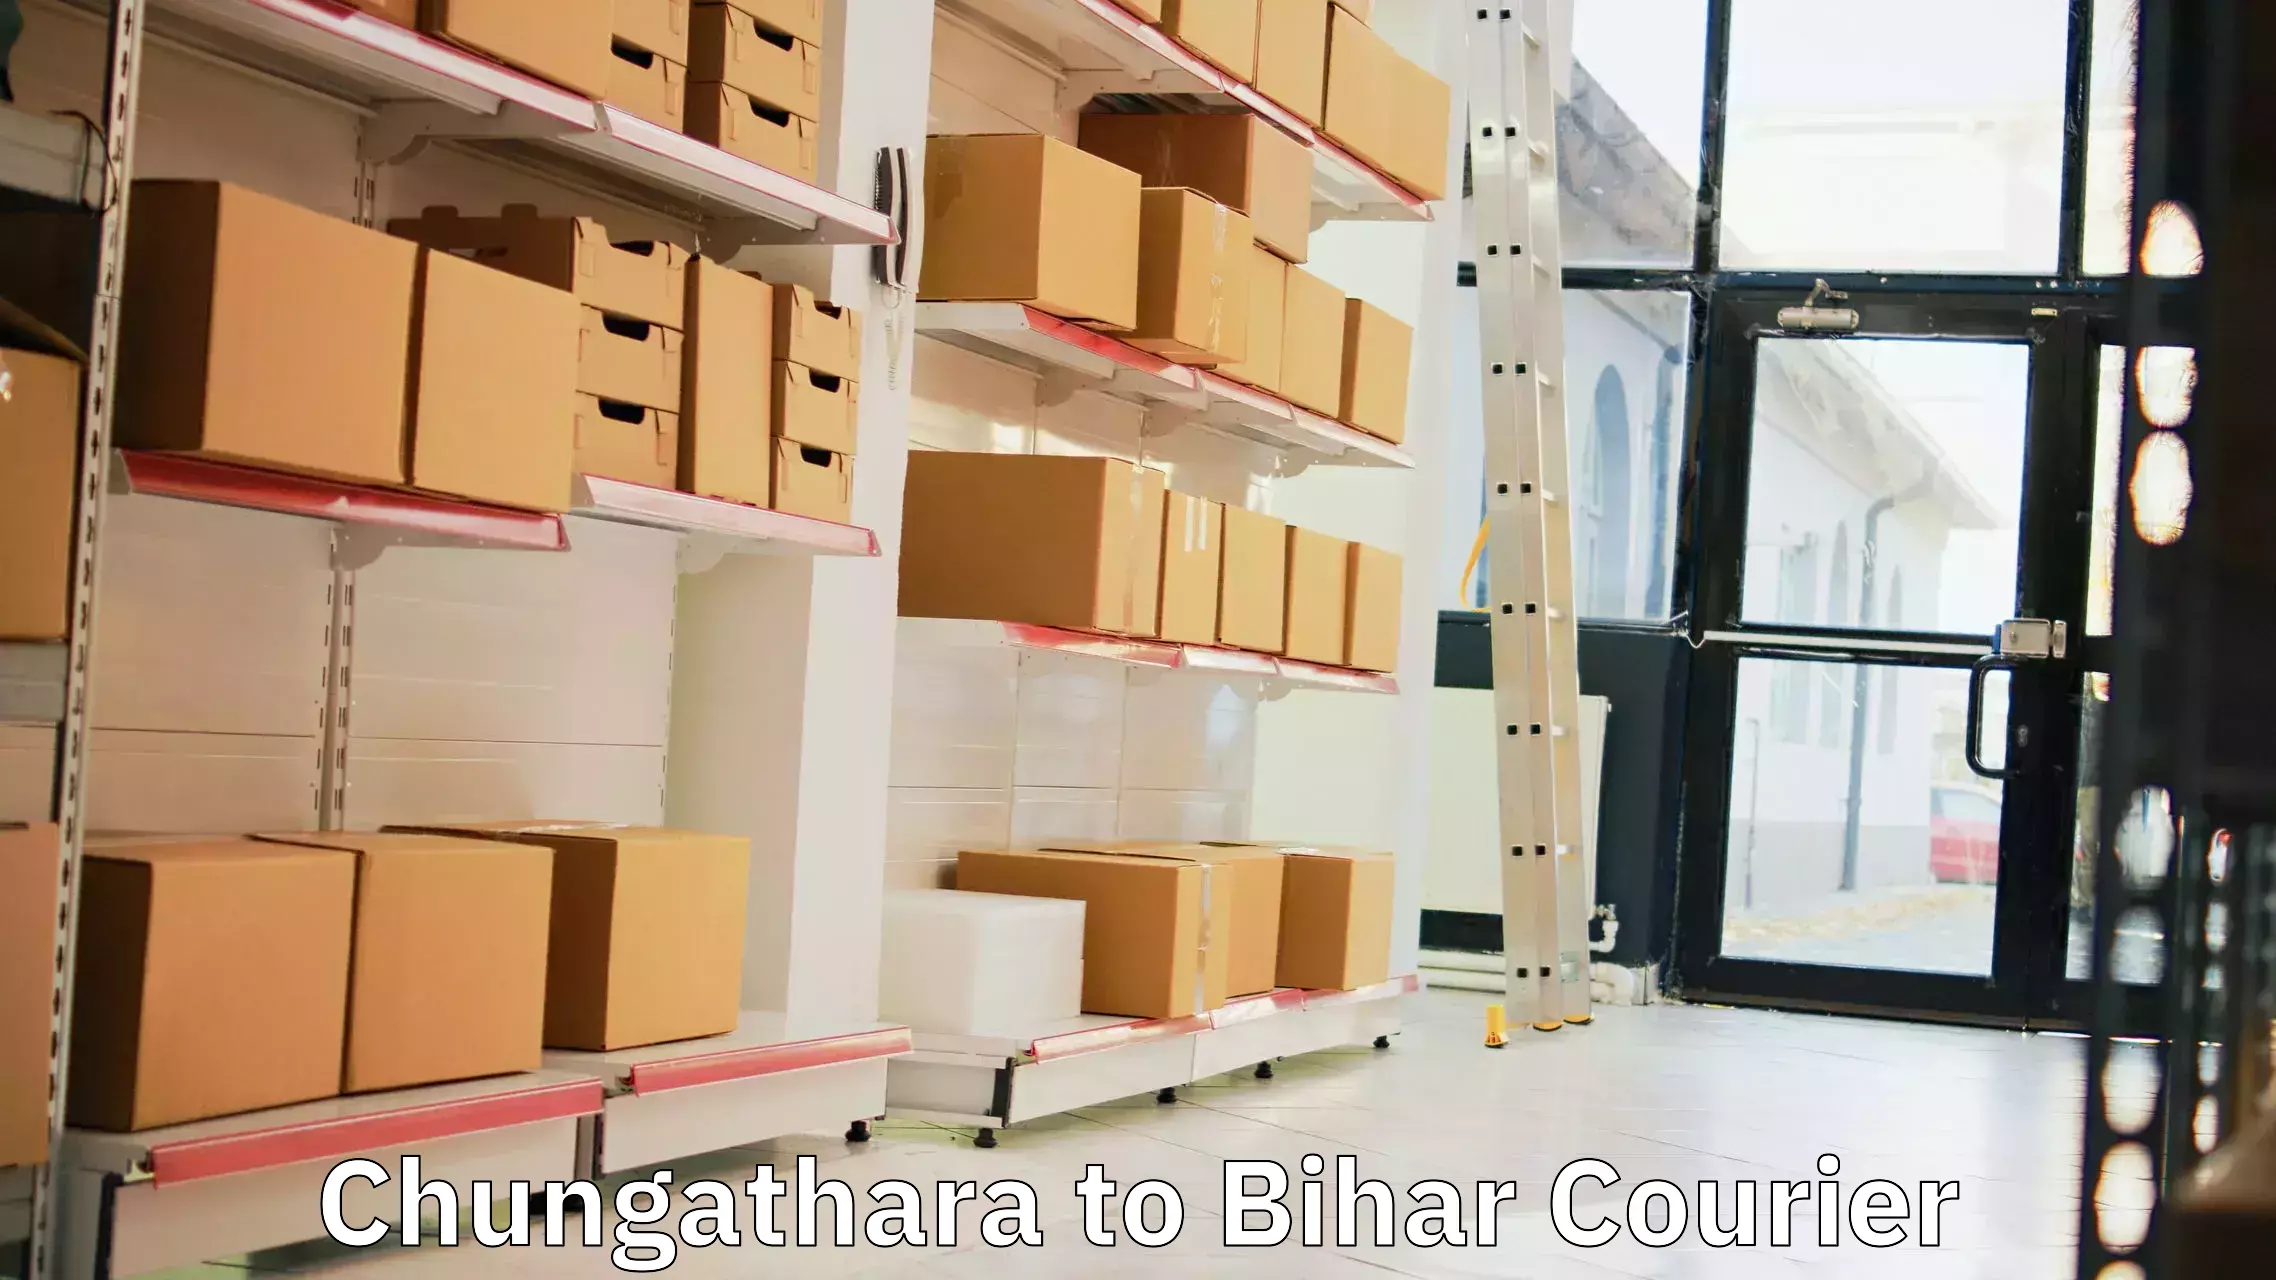 On-call courier service Chungathara to Mashrakh